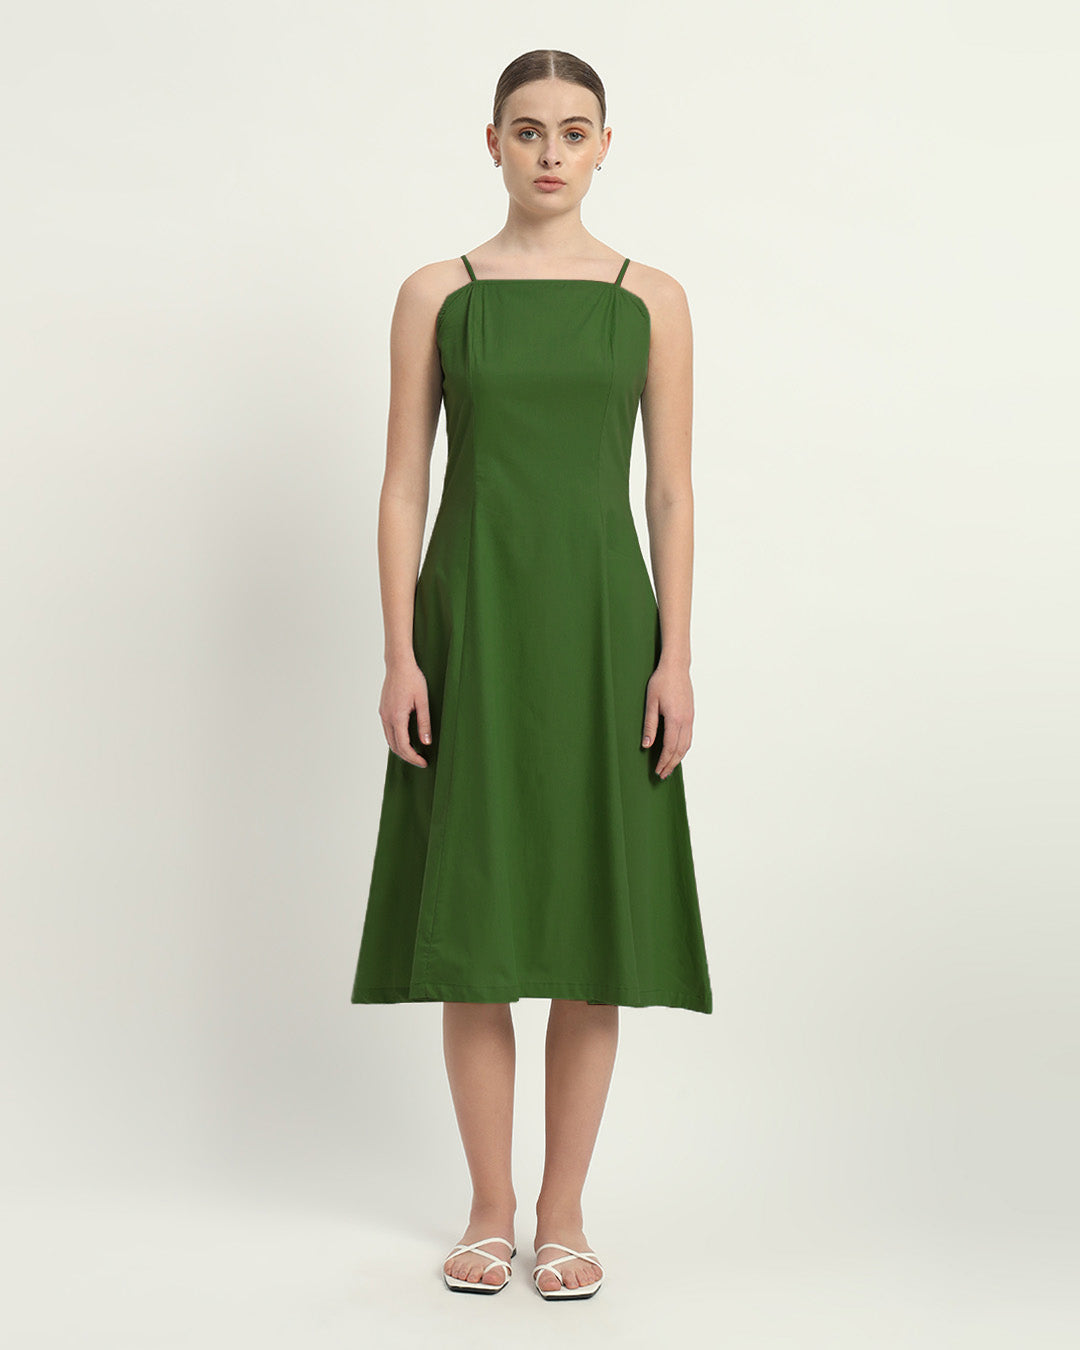 The Emerald Valatie Cotton Dress